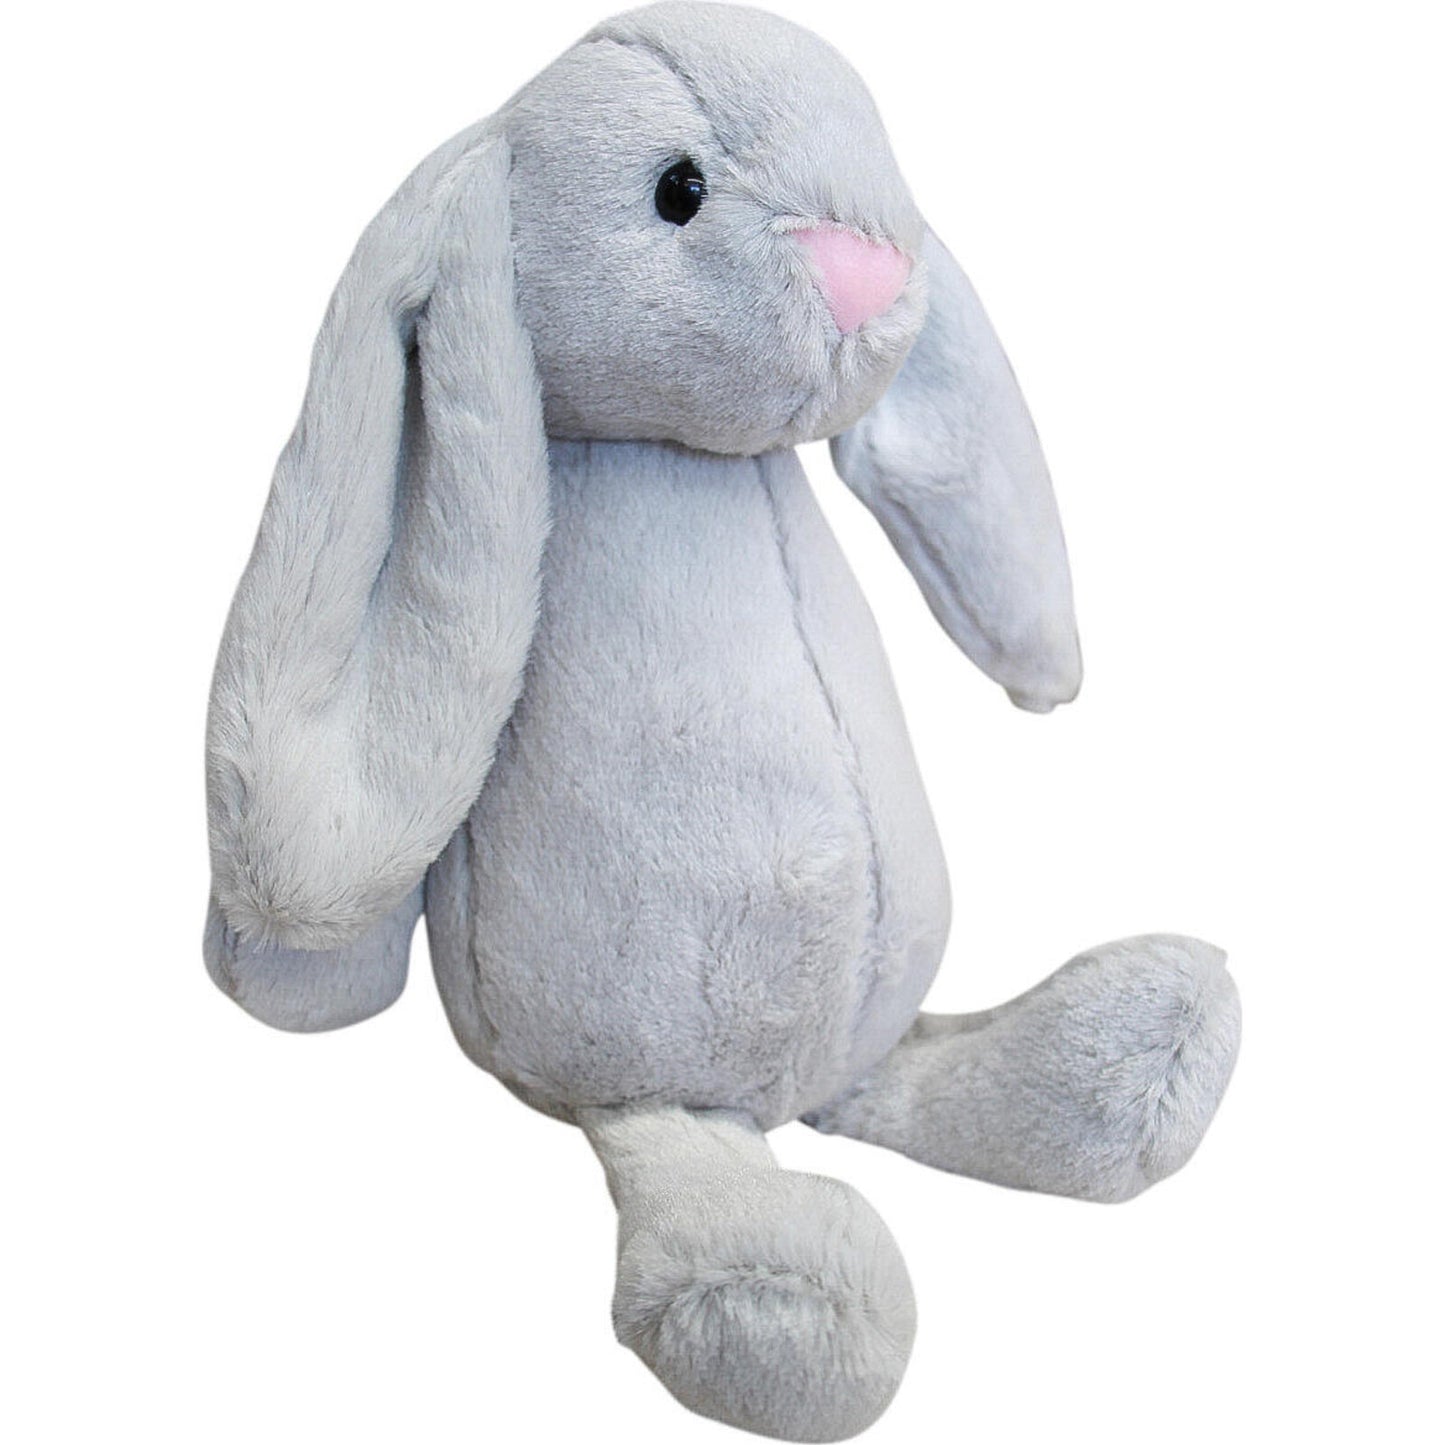 Small Plush Rabbit Toy NZ baby